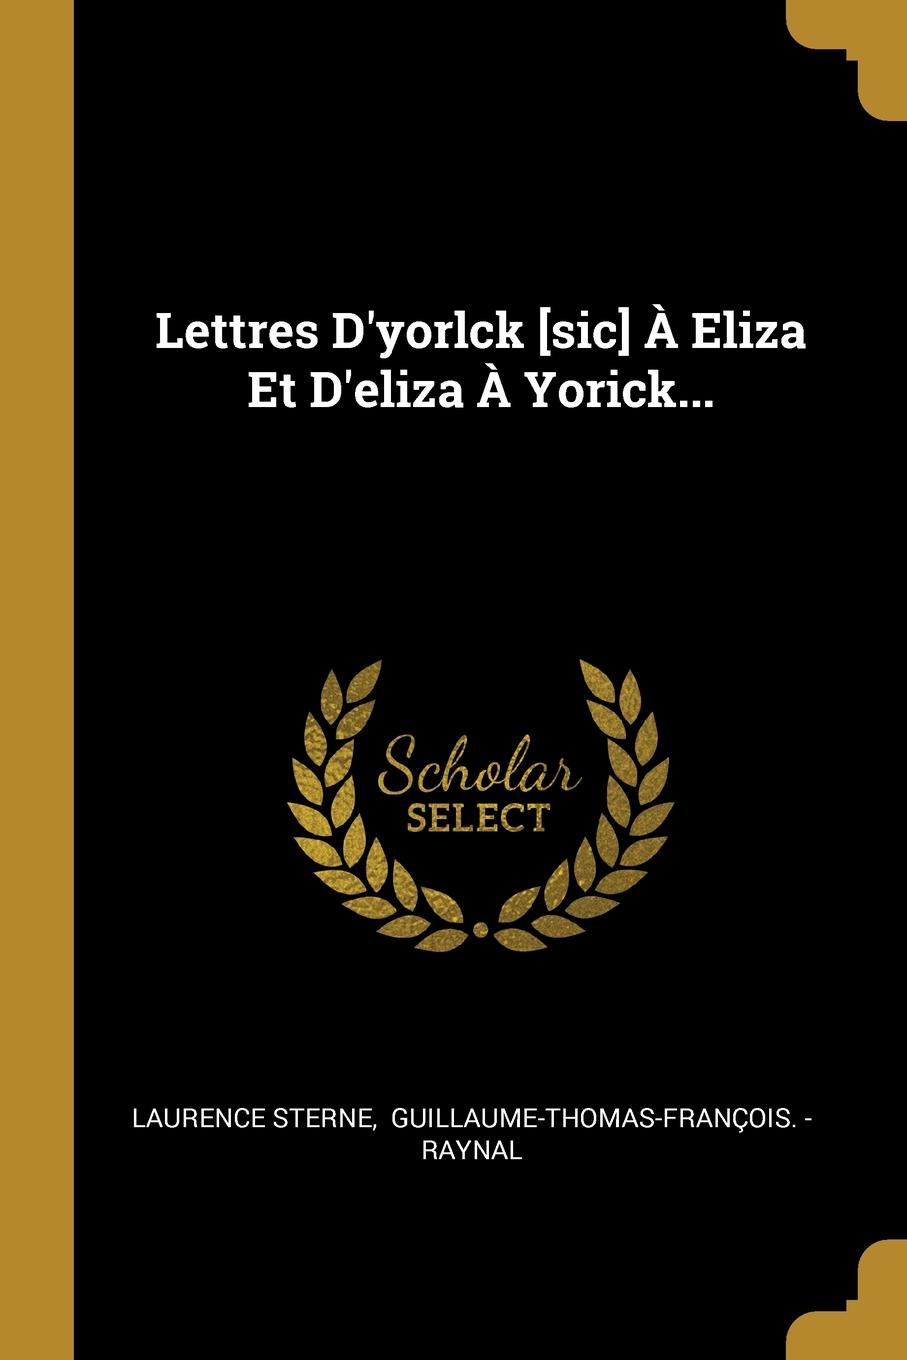 Lettres D.yorlck .sic. A Eliza Et D.eliza A Yorick...